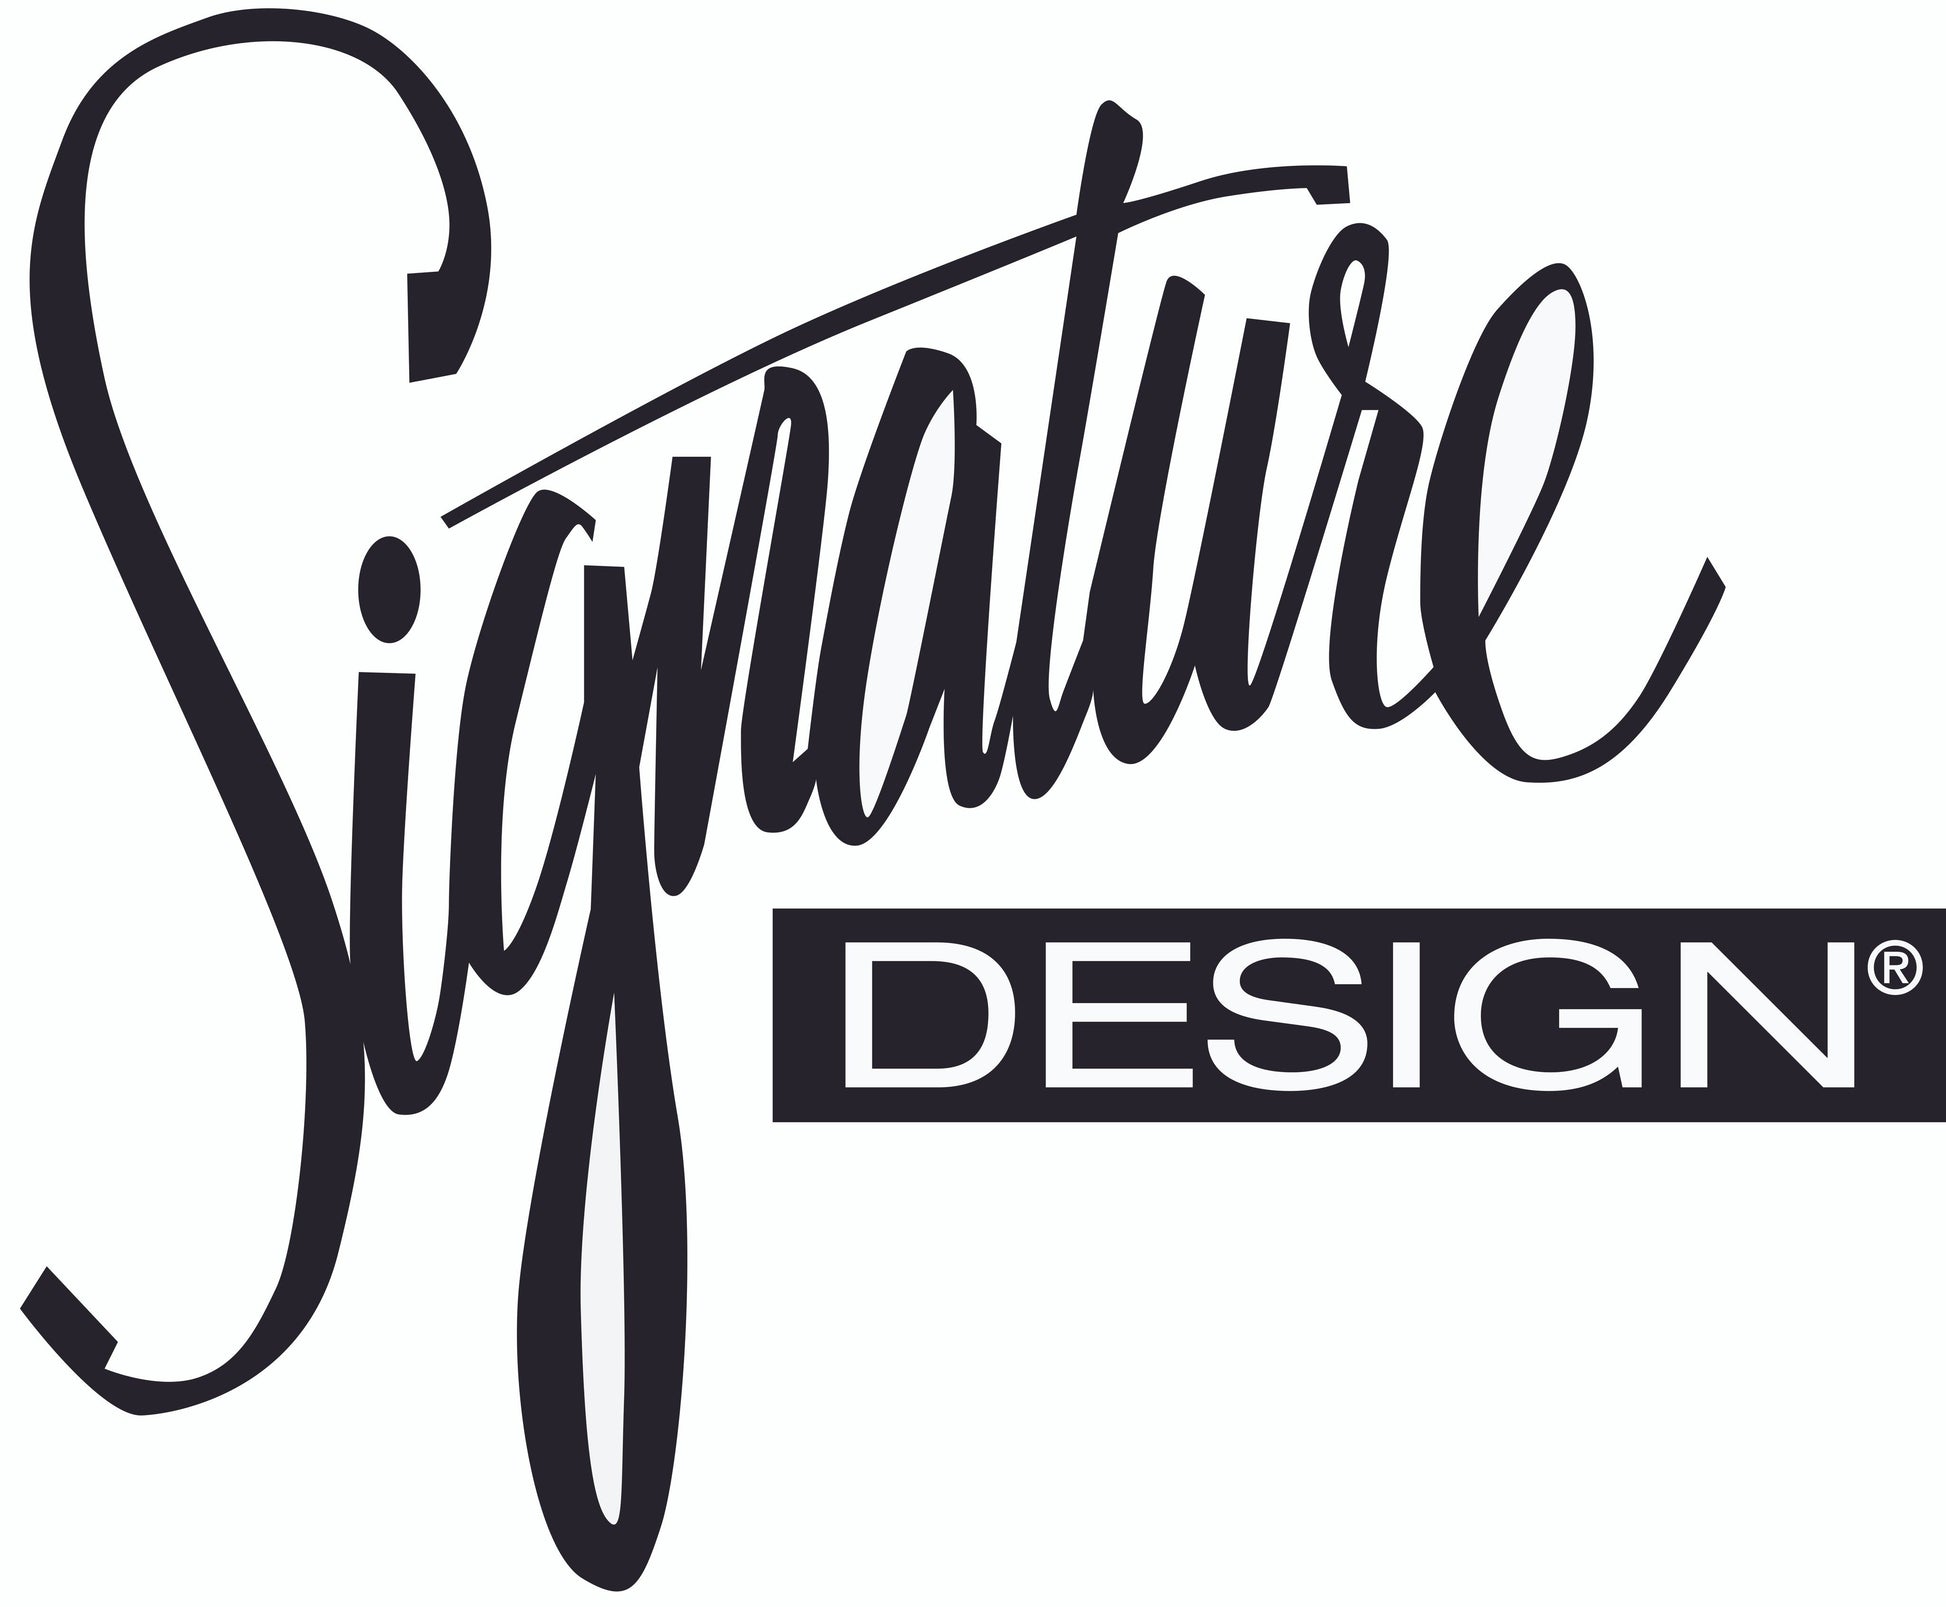 Cabalynn Dresser and Mirror Signature Design by Ashley®